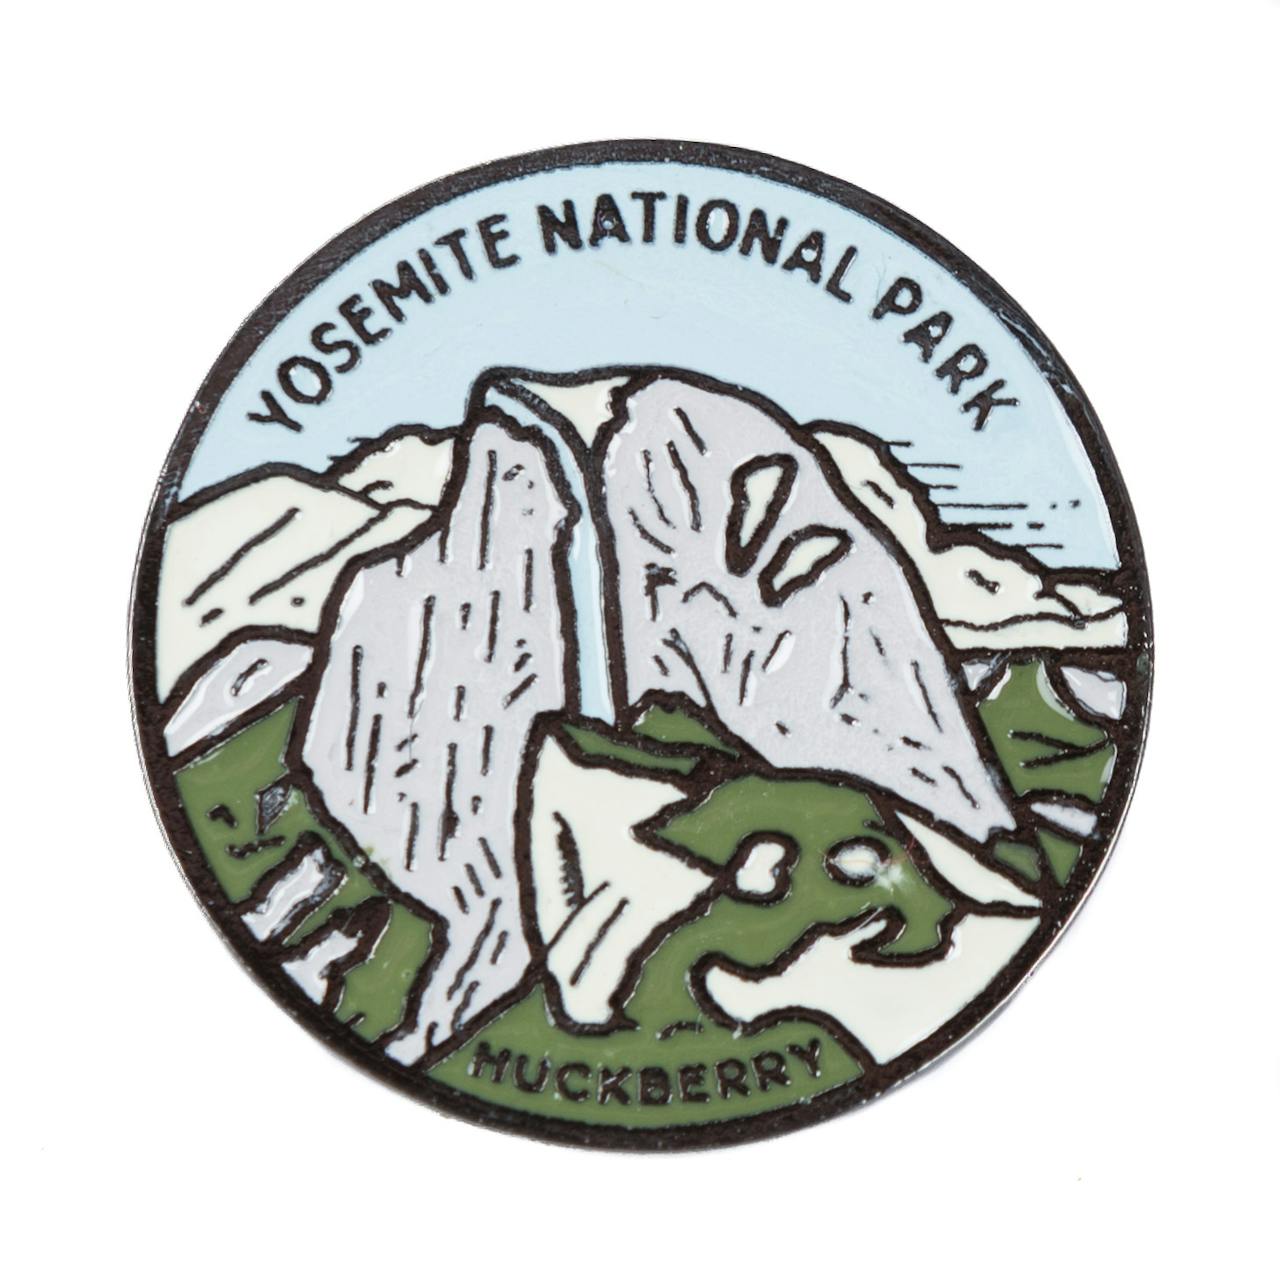 Huckberry Yosemite National Park Pin